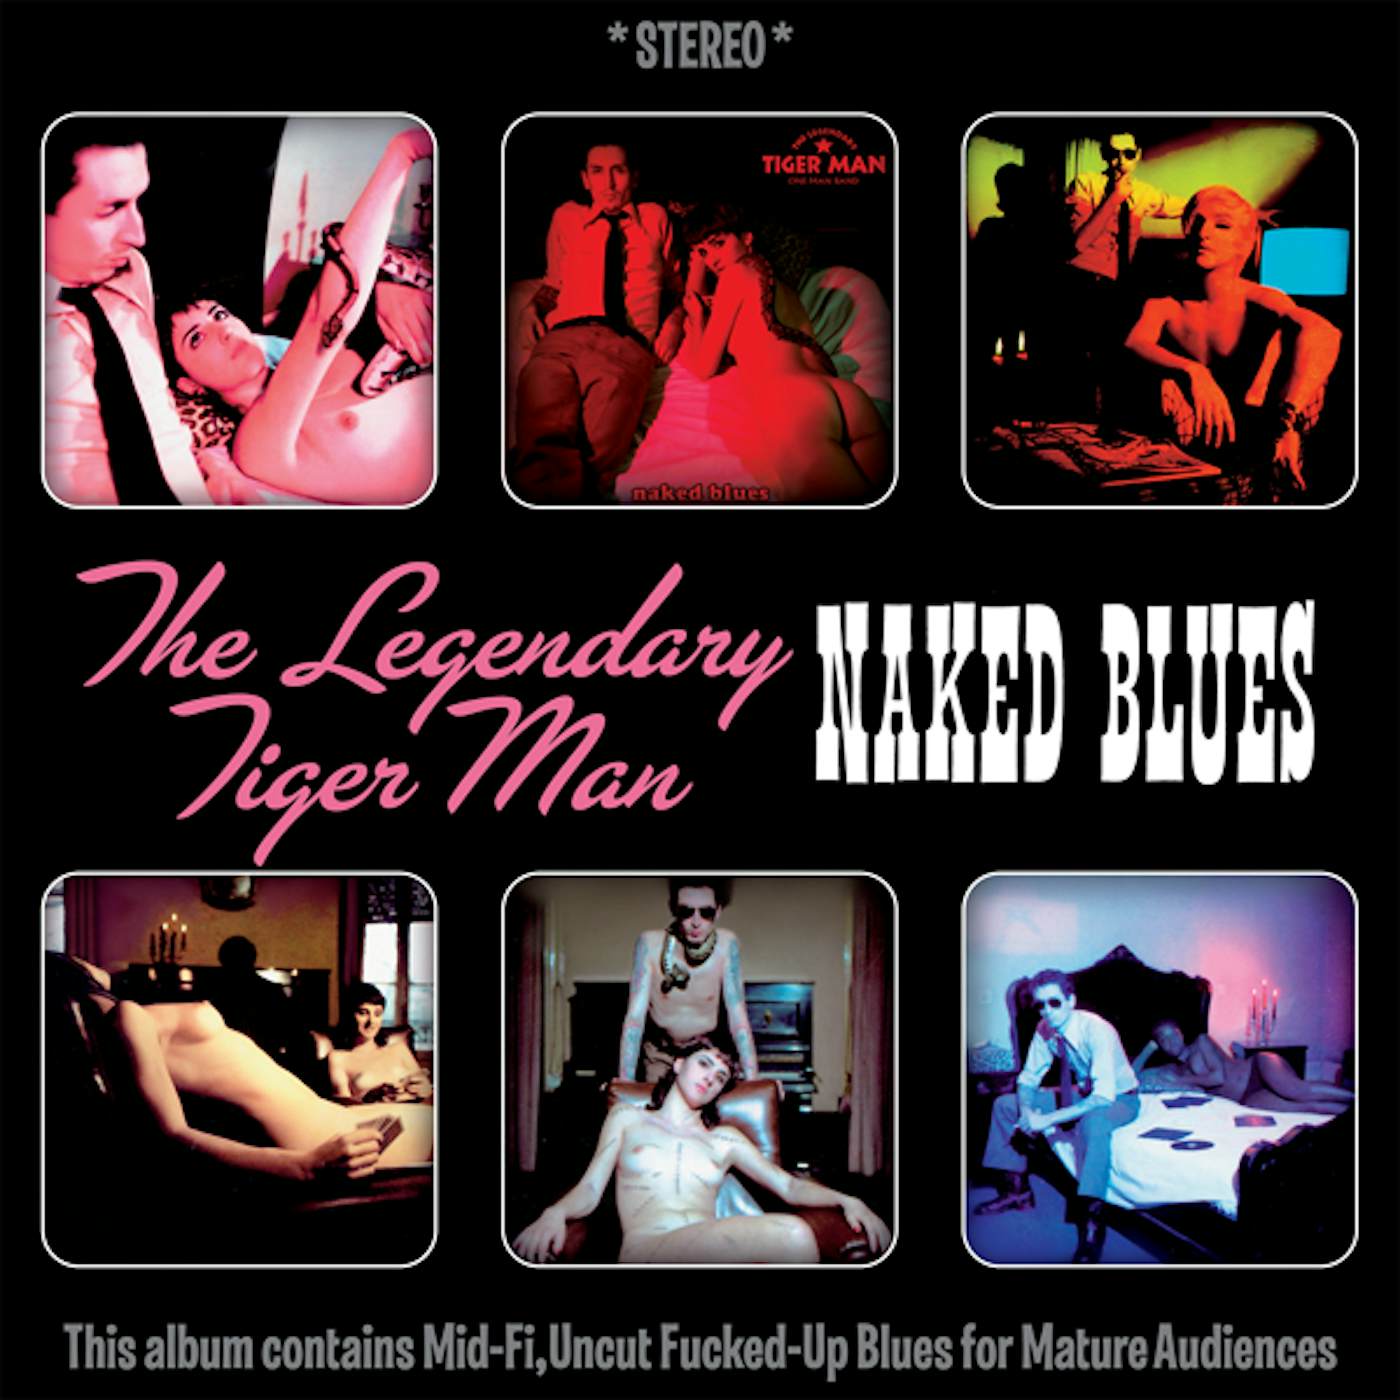 The Legendary Tigerman Naked Blues Vinyl Record